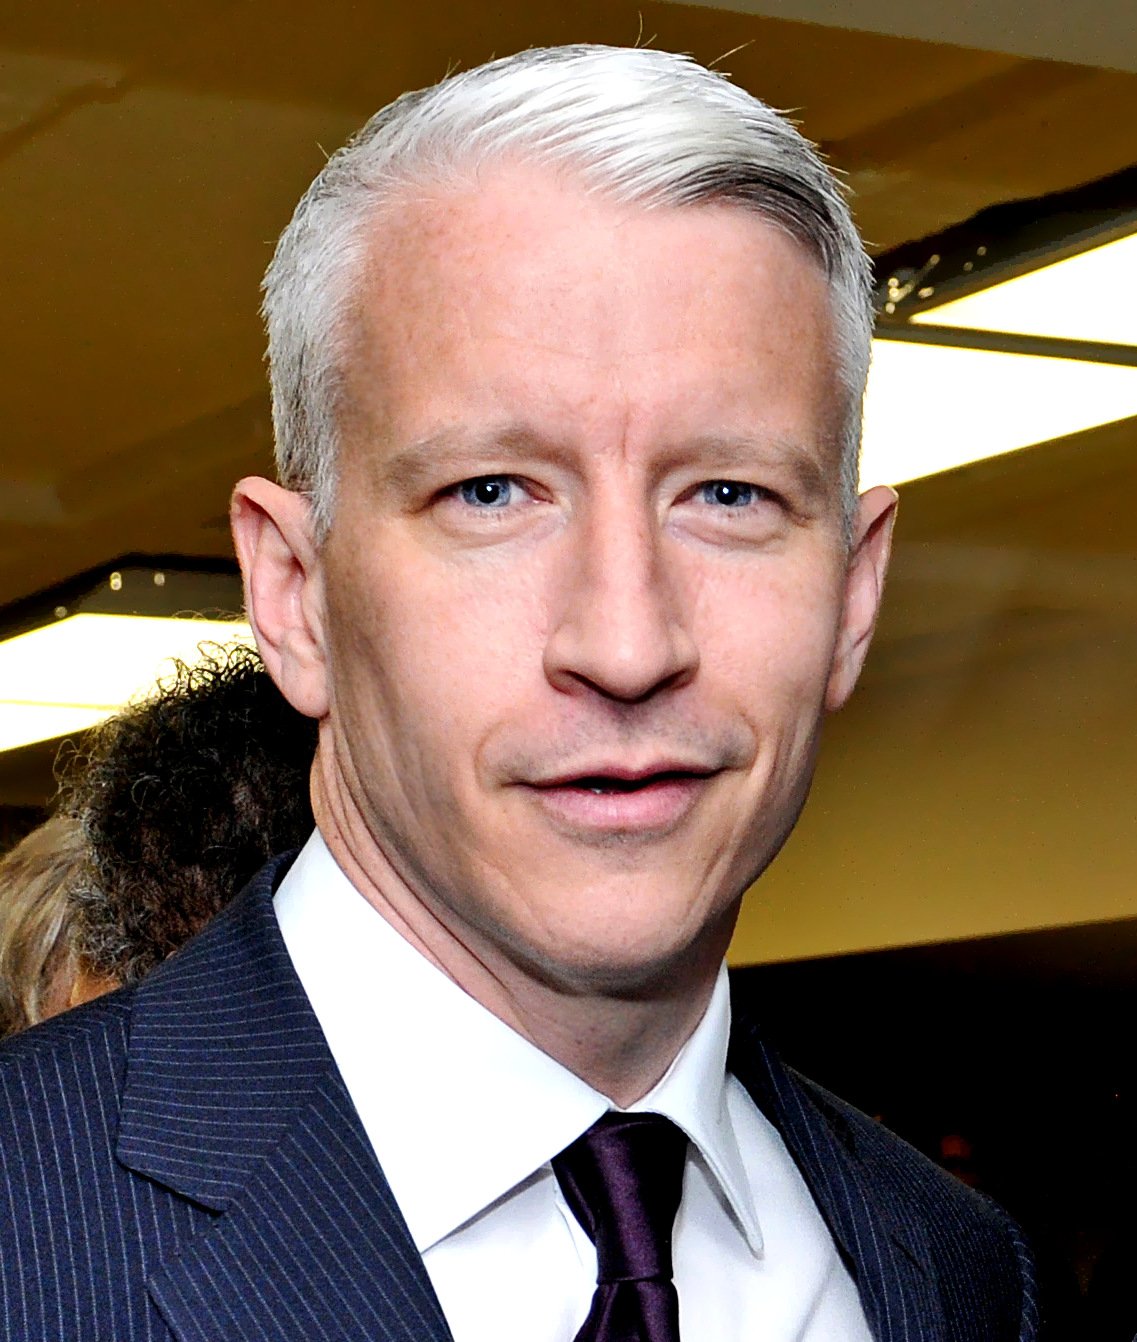 Anderson Cooper speaker